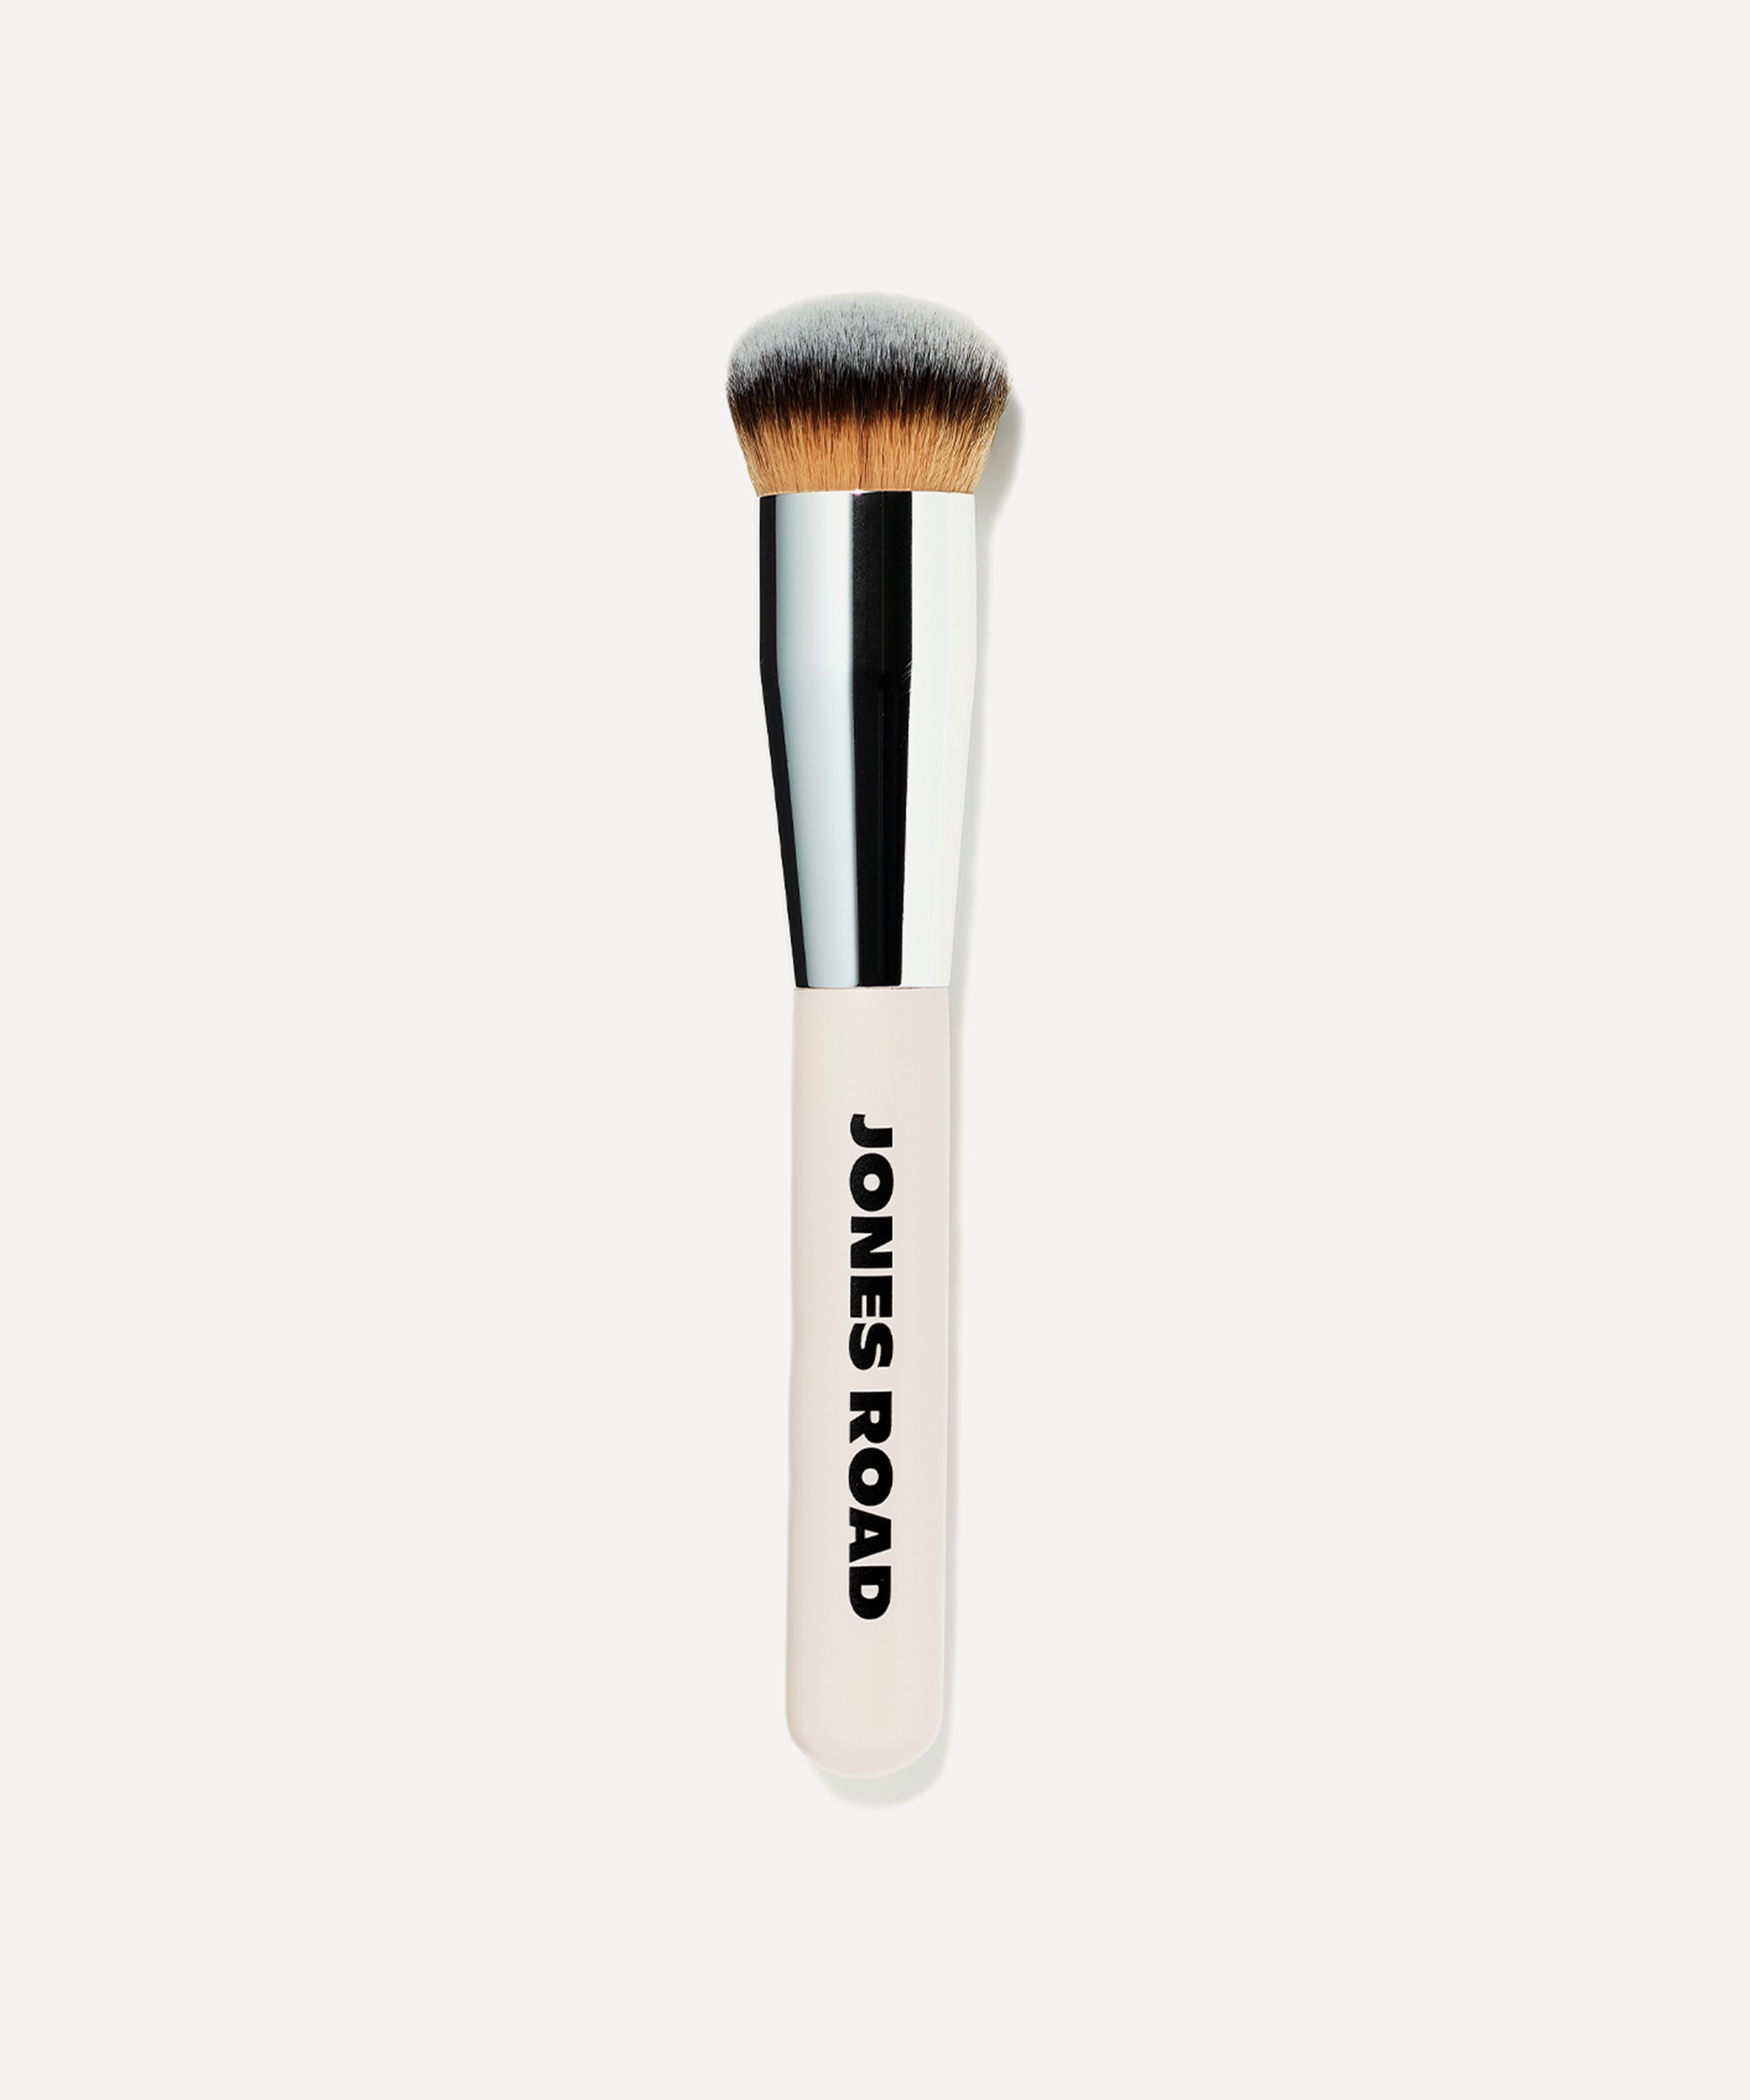 Brush gift set: duo face brush and duo eye brush - Holiday Première  Unmissable Brushes Gift Set - KIKO MILANO